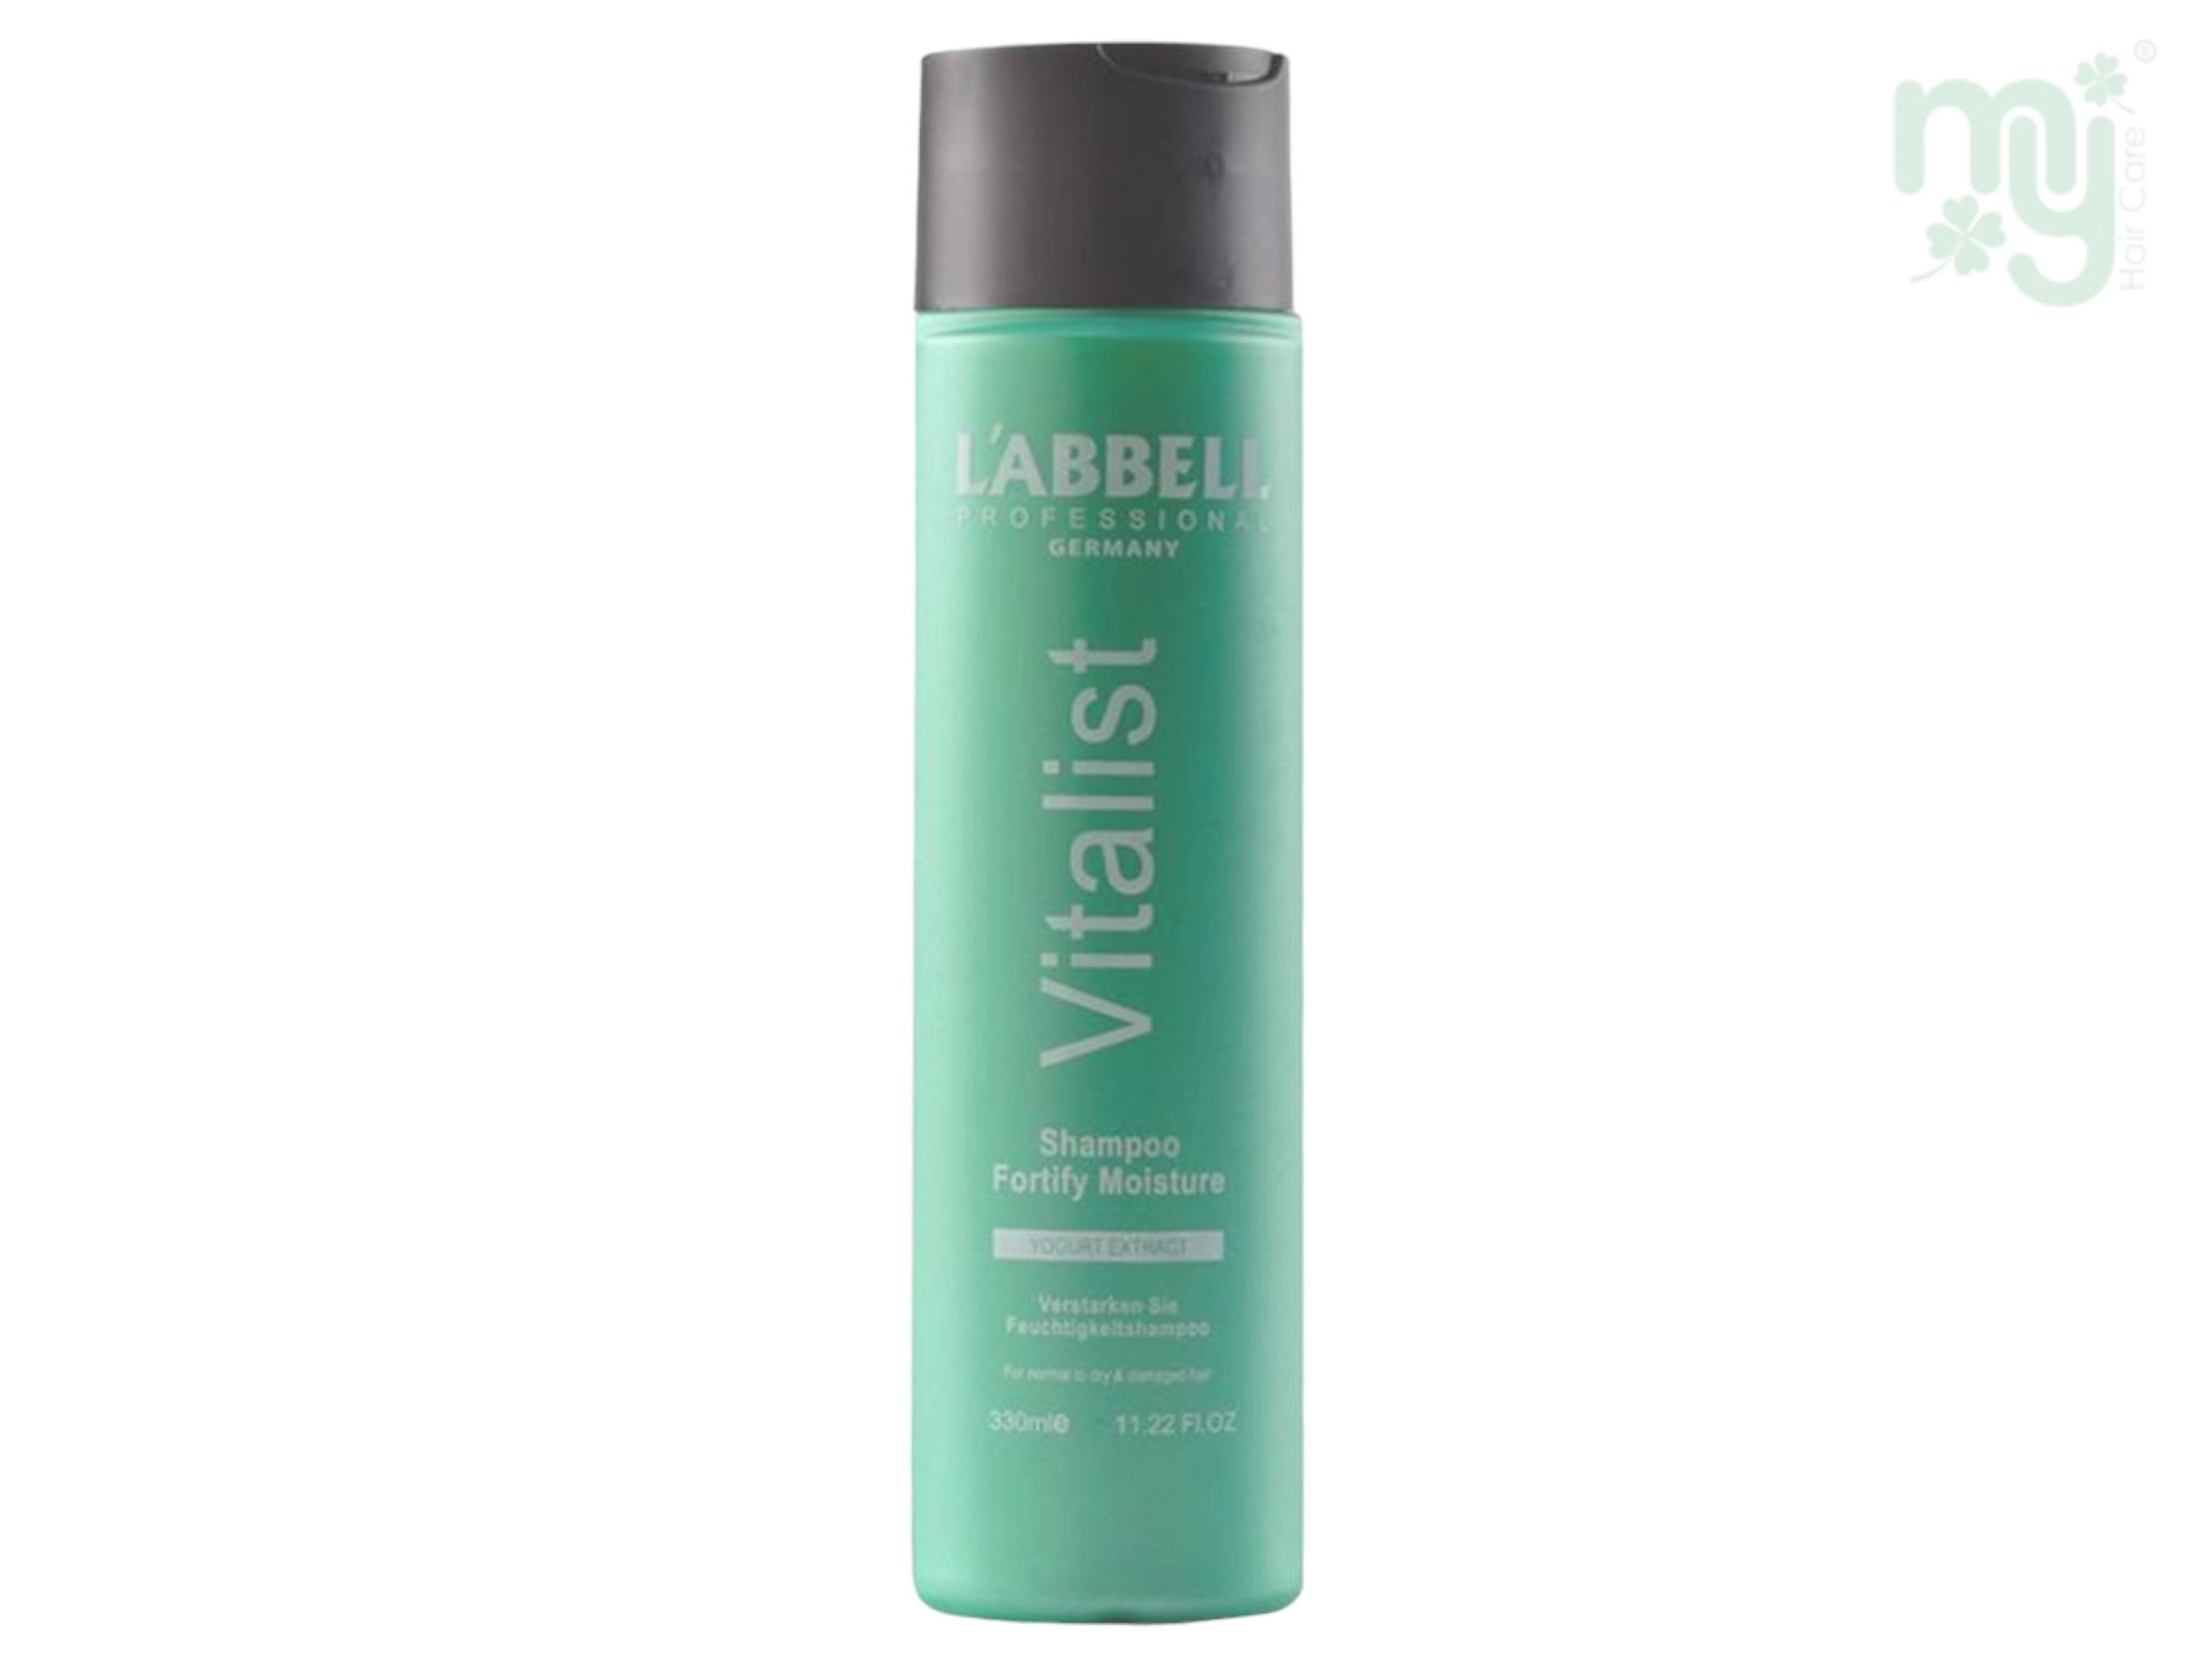 Labbell Vitalist Fortify Moisture Shampoo 330ml 